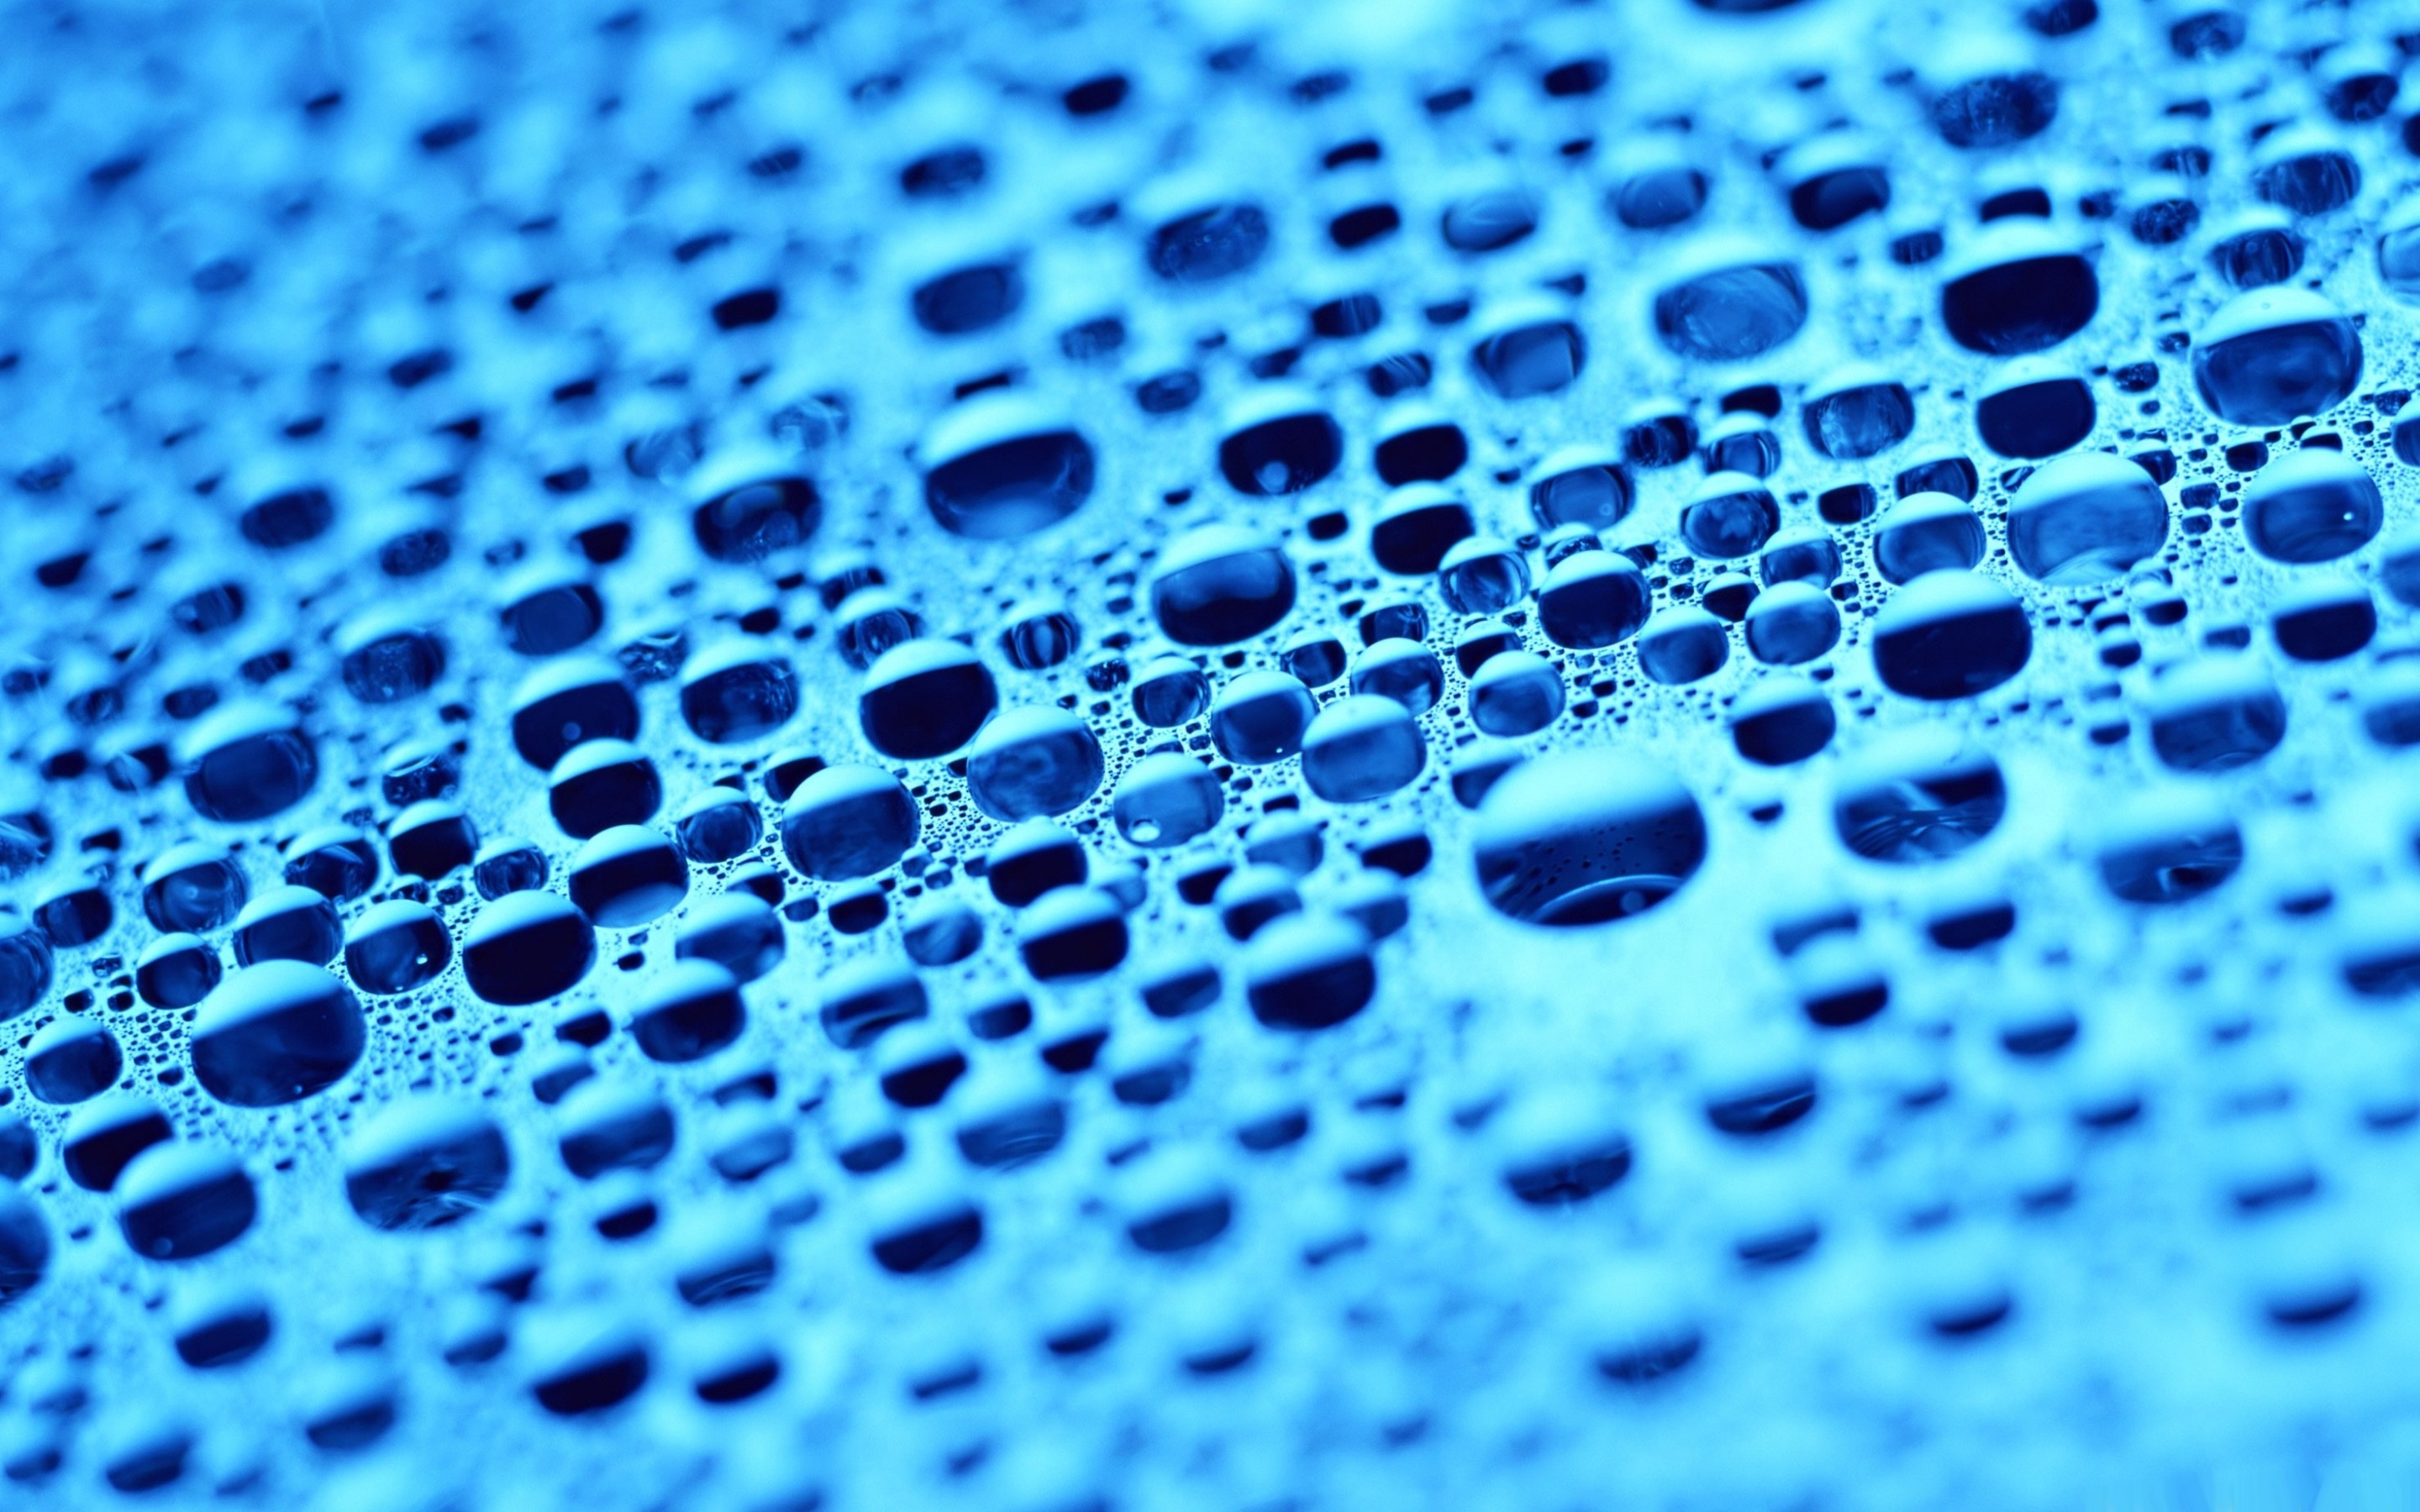 2880x1800 Wet Blue Surface Mac Wallpaper Download | Free Mac Wallpapers Download